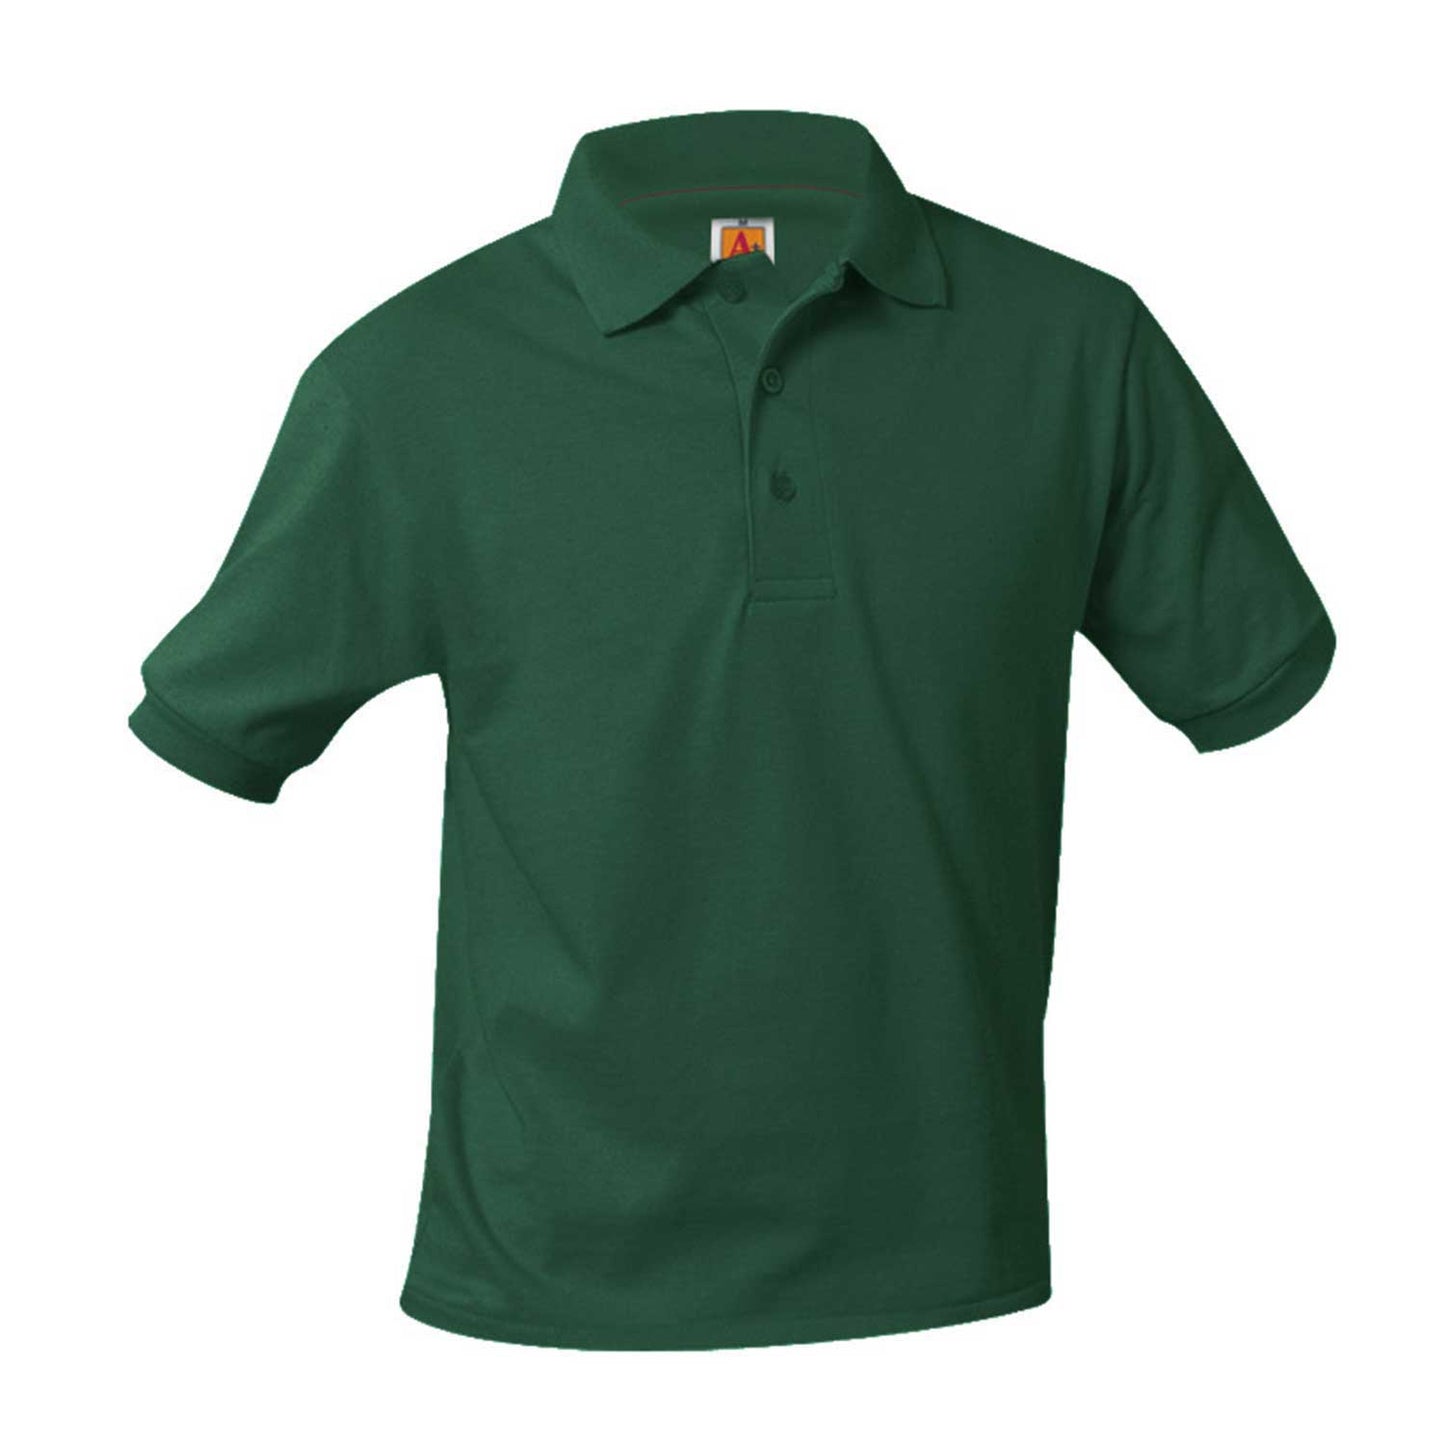 Unisex Jersey Knit Polo Shirt, Short Sleeves w/Logo - 1300